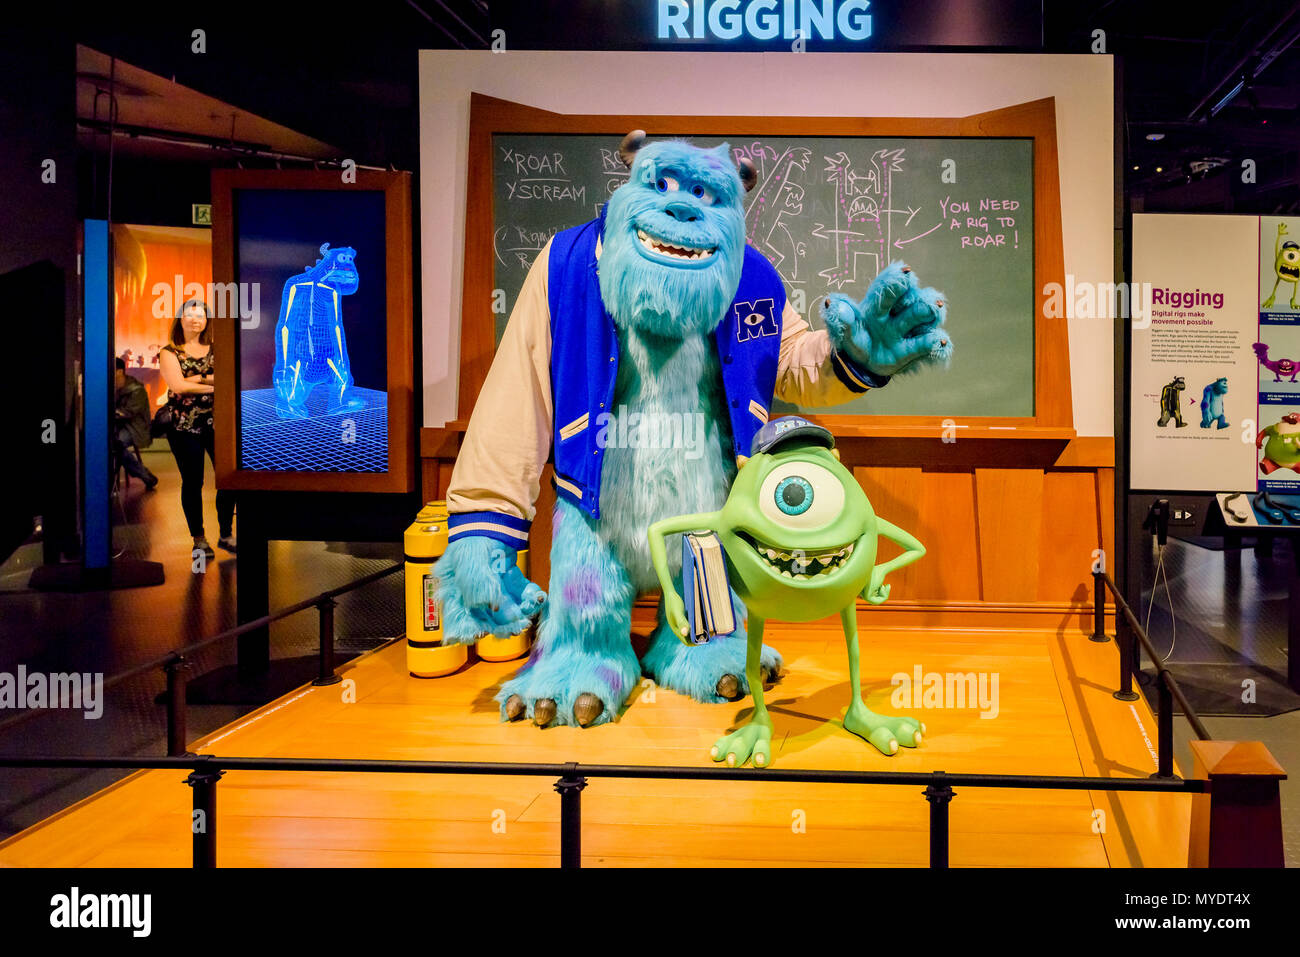 Pixar exhibit hi-res stock photography and images - Alamy